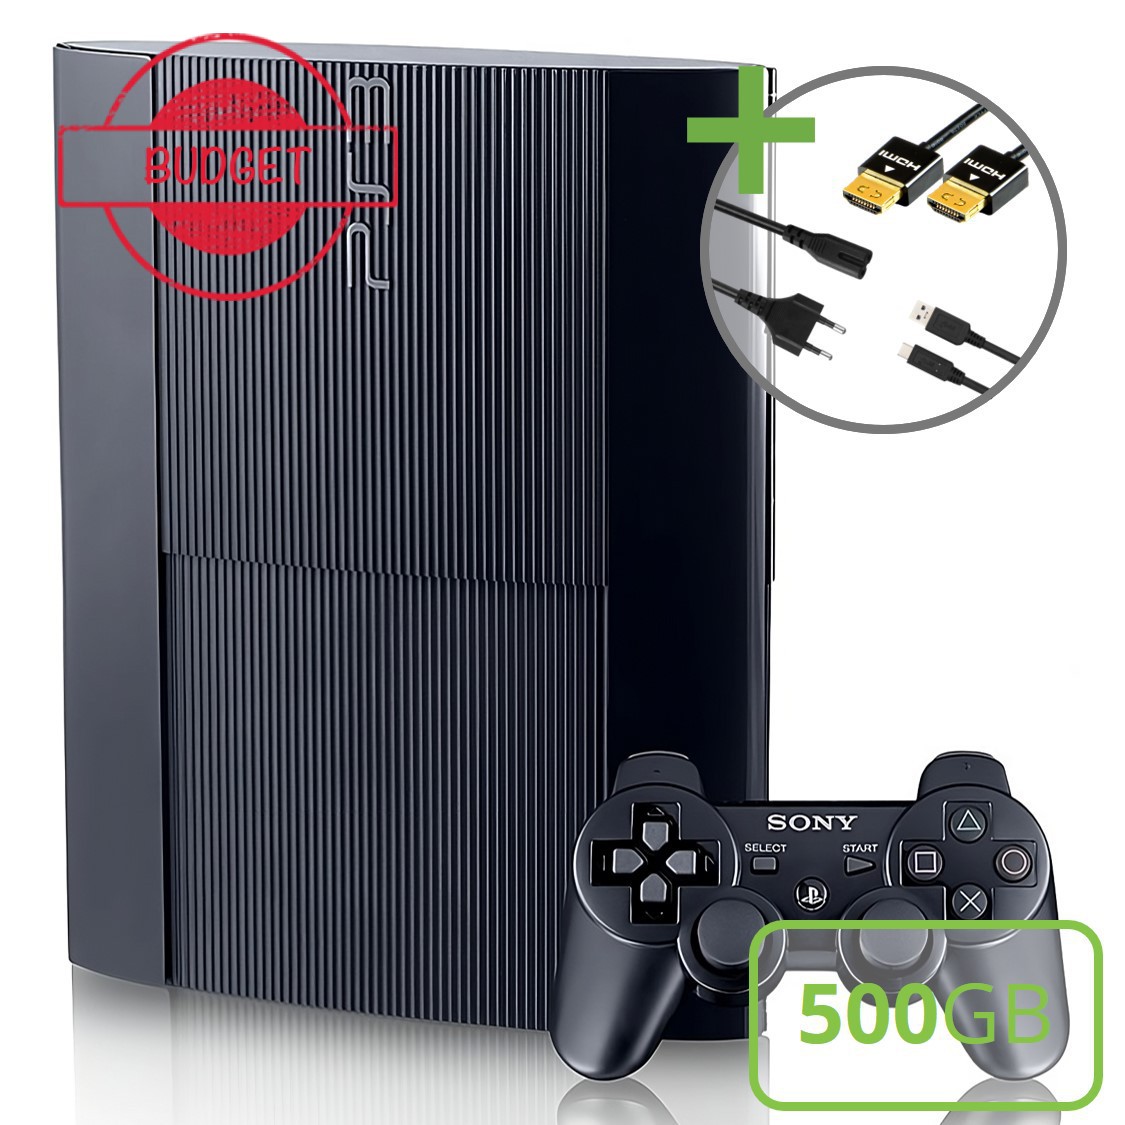 Sony PlayStation 3 Super Slim (500GB) Starter Pack - DualShock Edition - Budget - Playstation 3 Hardware - 2